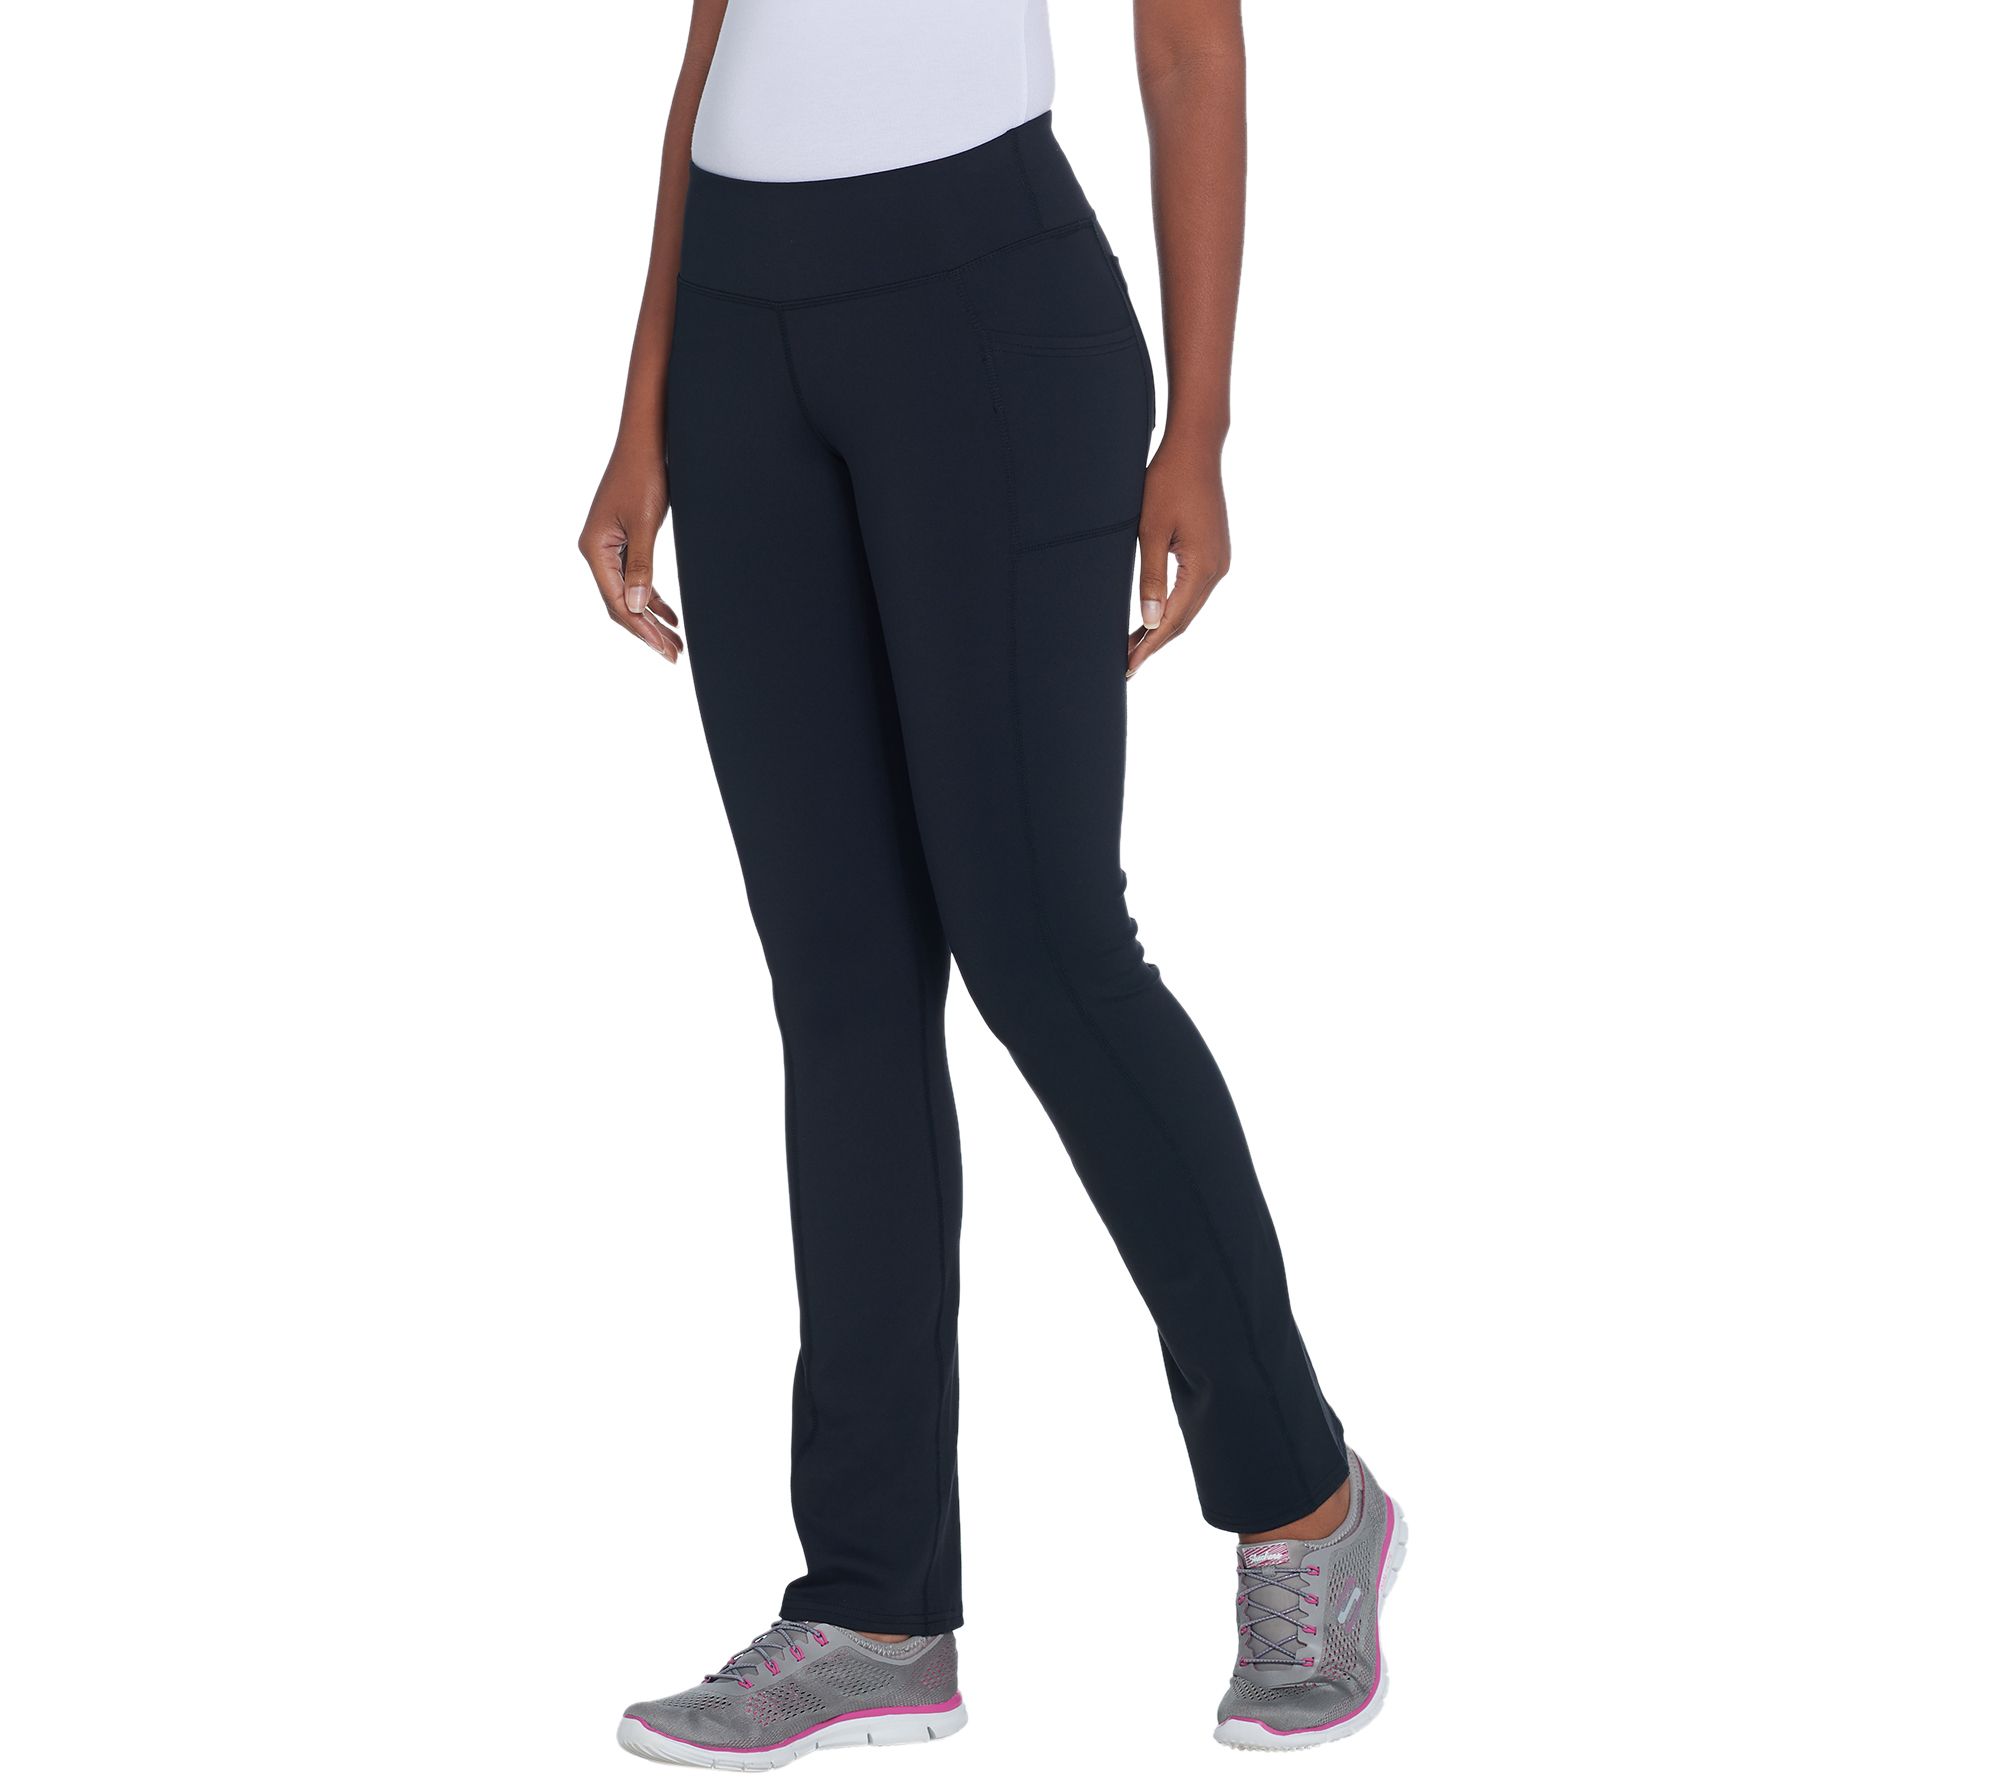 Skechers GO WALK OG Pant Black Medium  Flex leggings, Black pants, Clothes  design